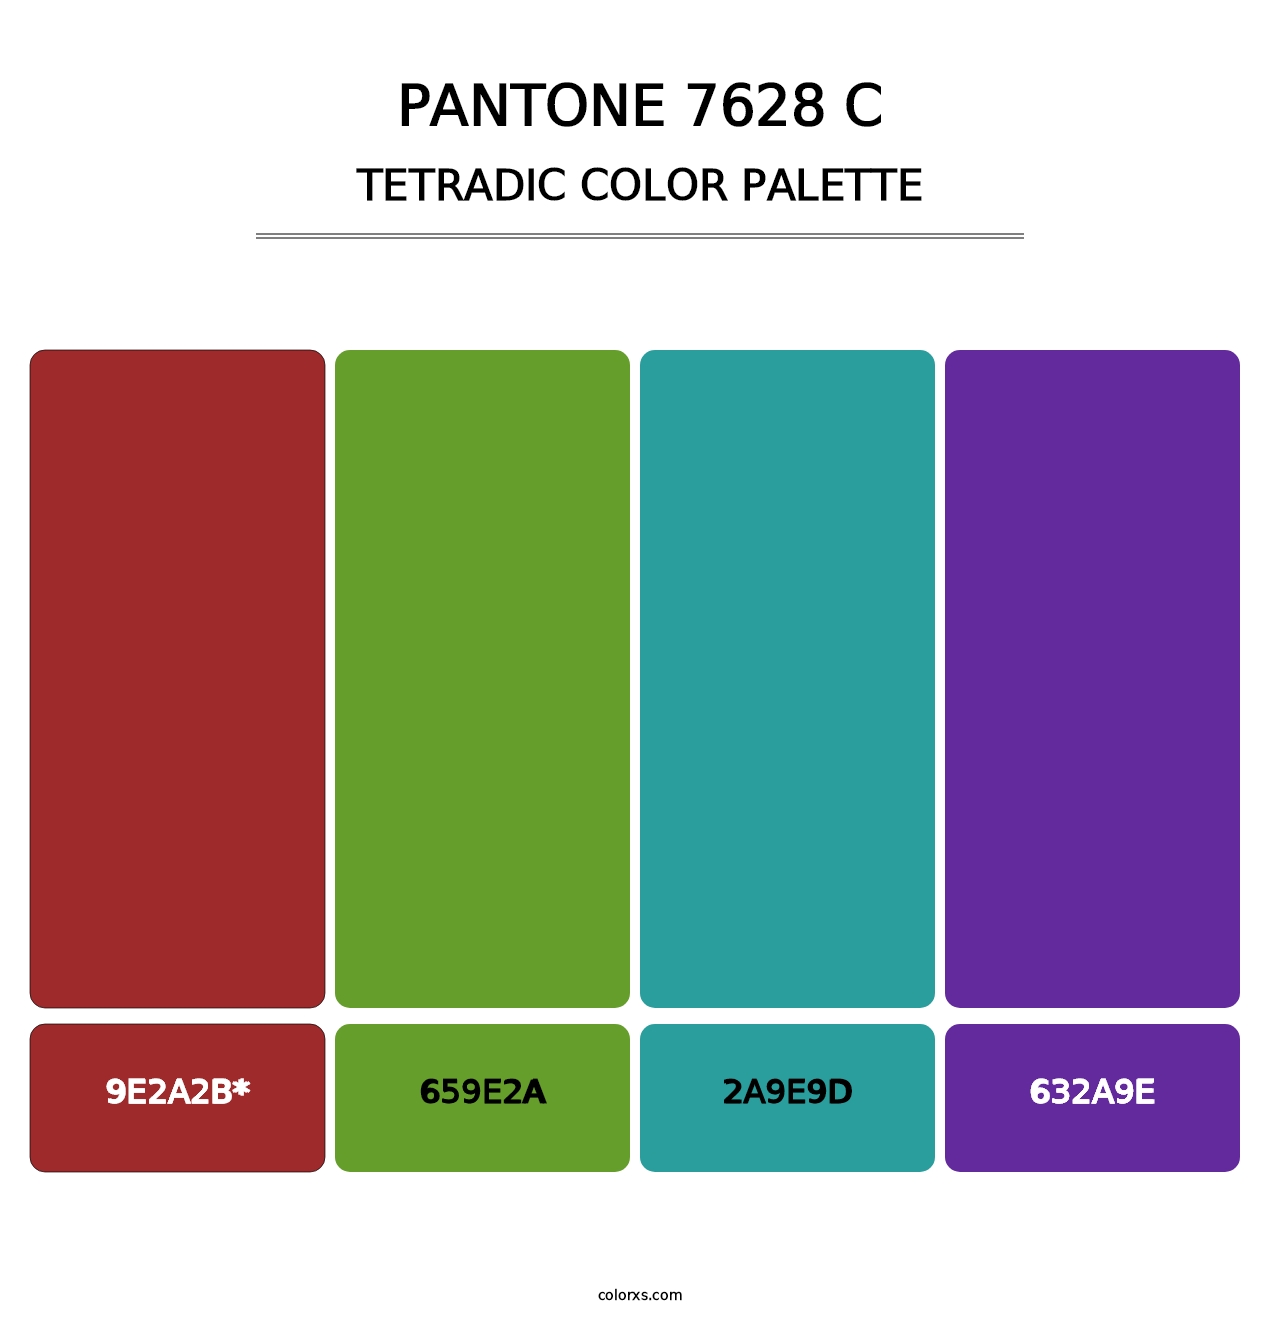 PANTONE 7628 C - Tetradic Color Palette